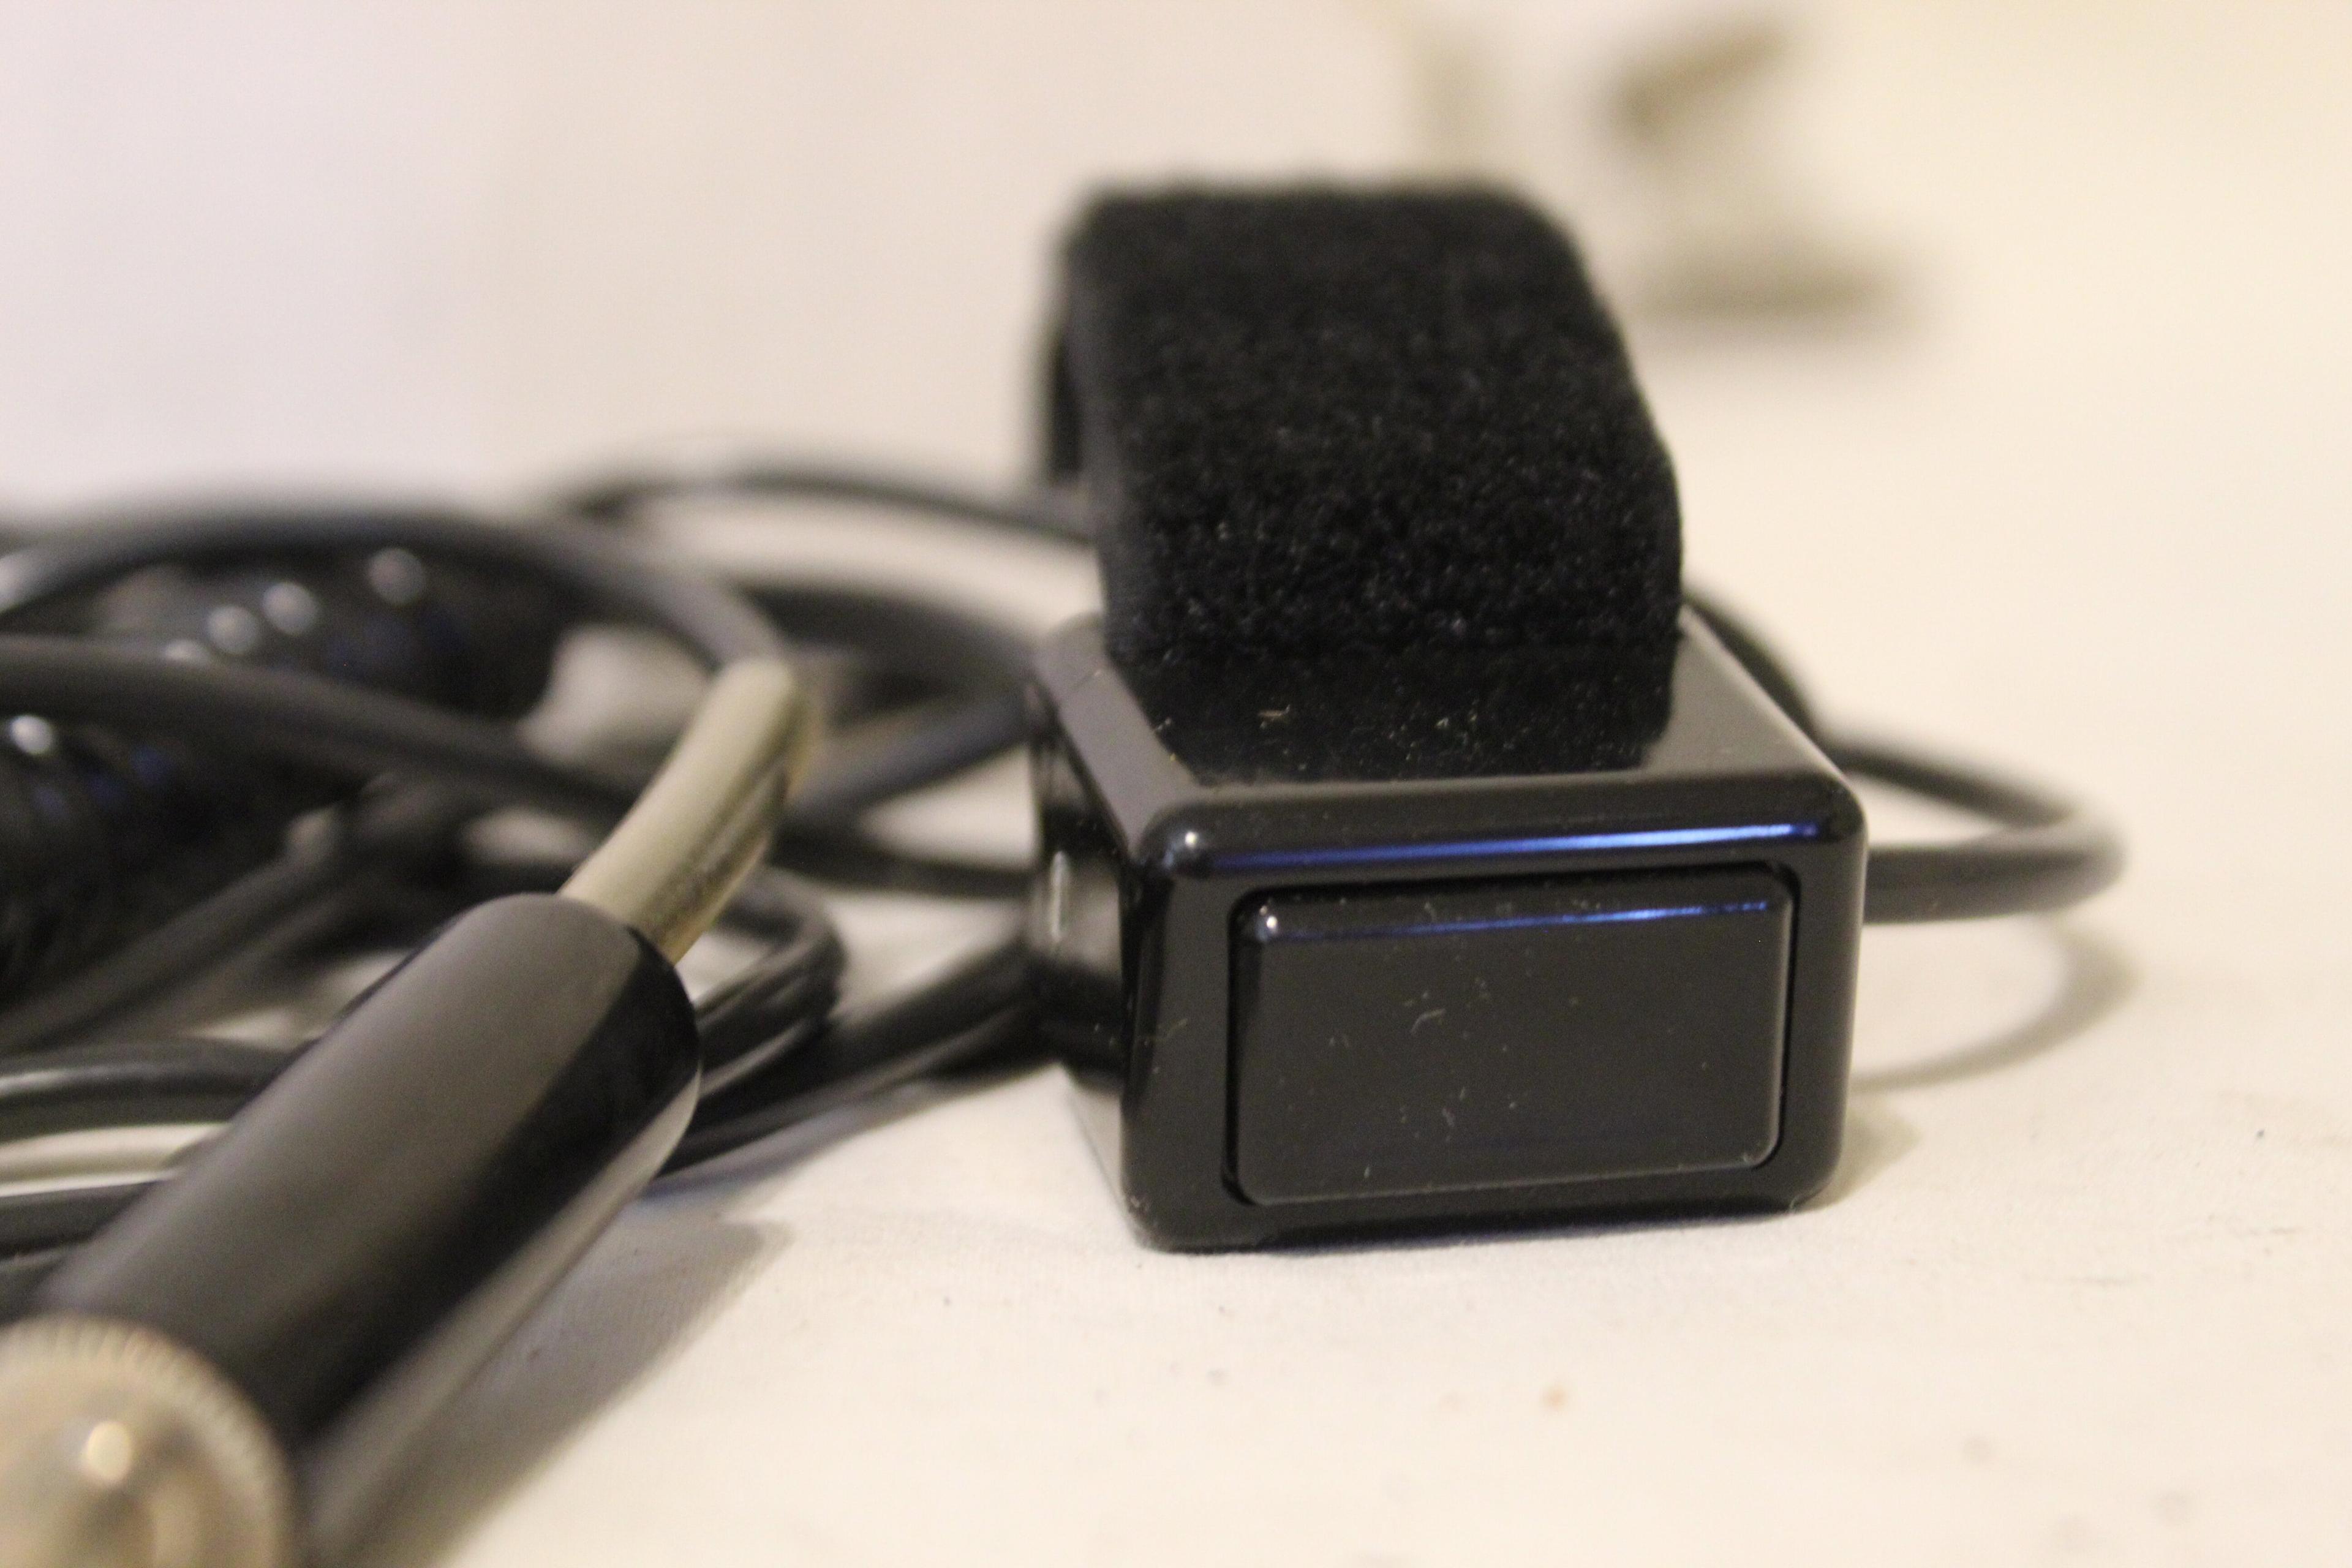 Telex Push-talk Switch Pt-200 With Hanger Bracket Kit For Tel-66 Microphone